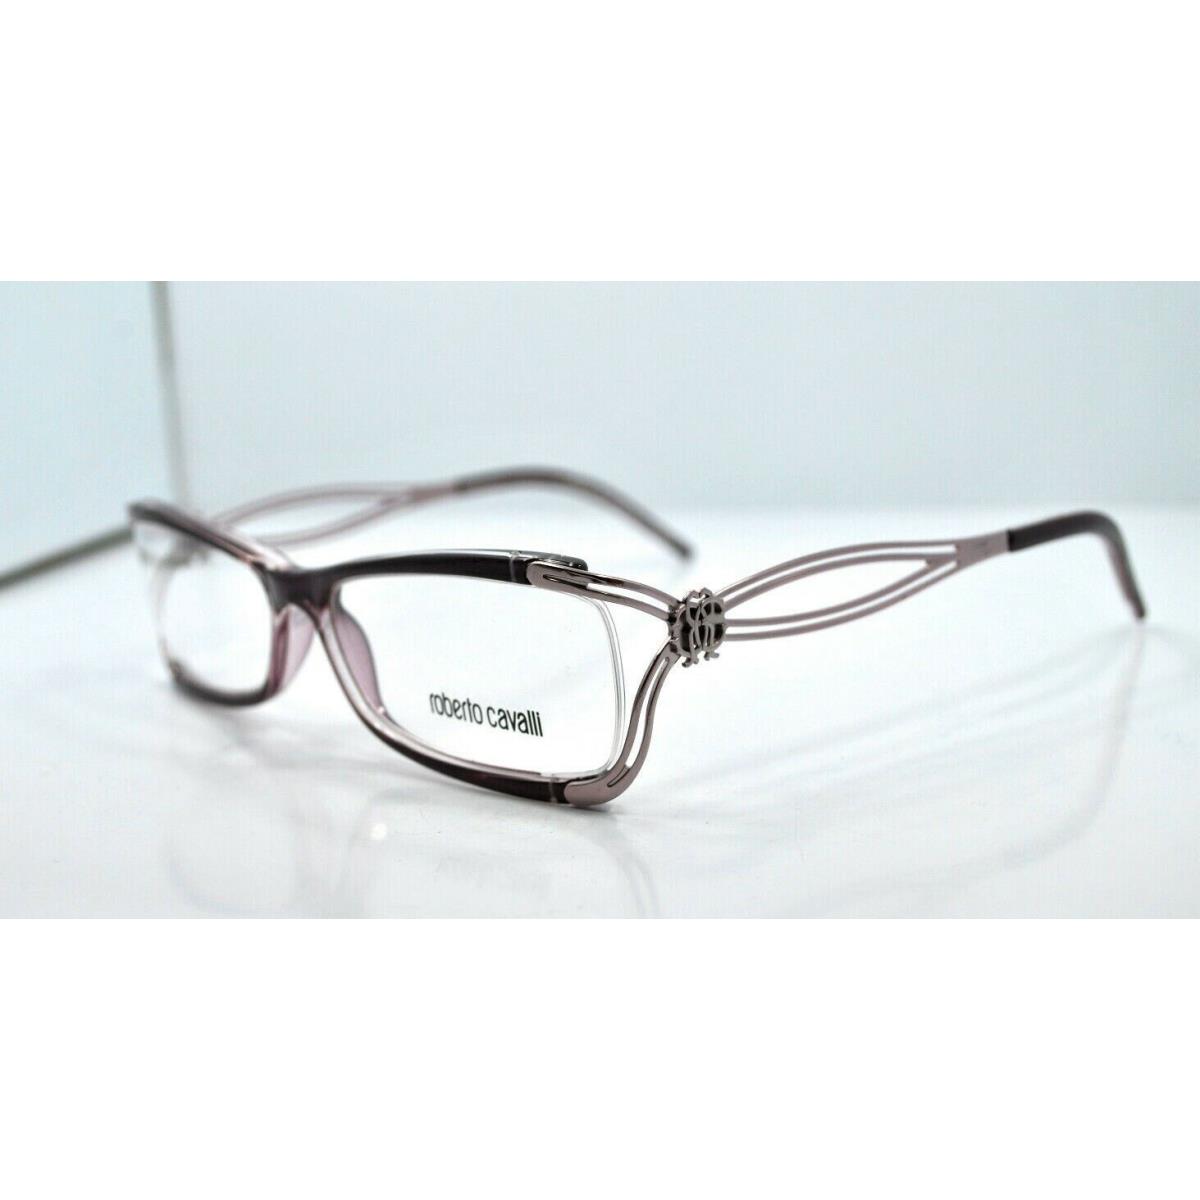 Roberto Cavalli Caneeella 635 074 Eyeglasses Frame